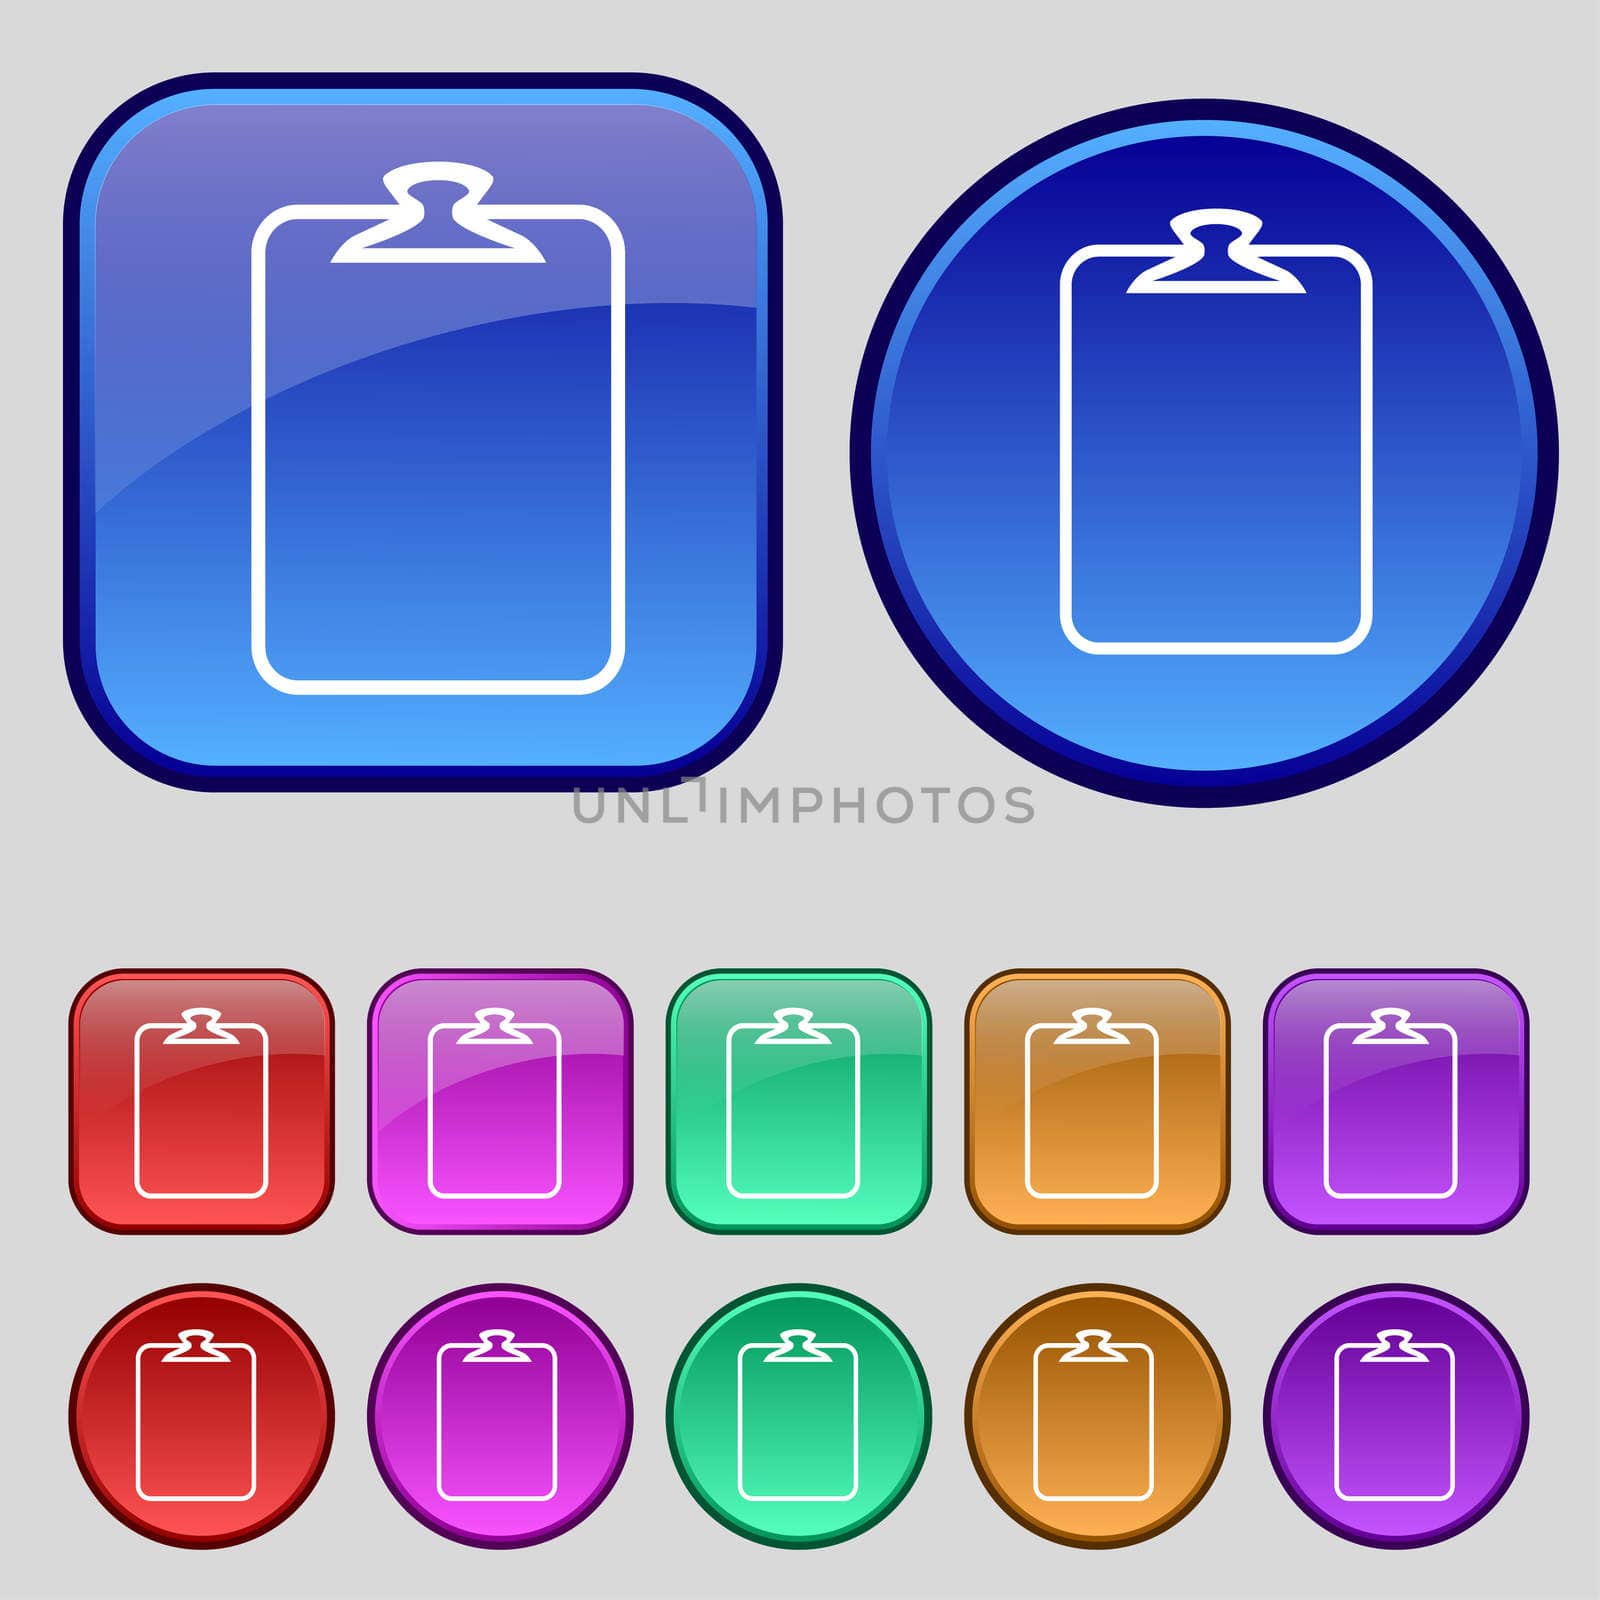 File annex icon. Paper clip symbol. Attach sign. Set of coloured buttons. illustration